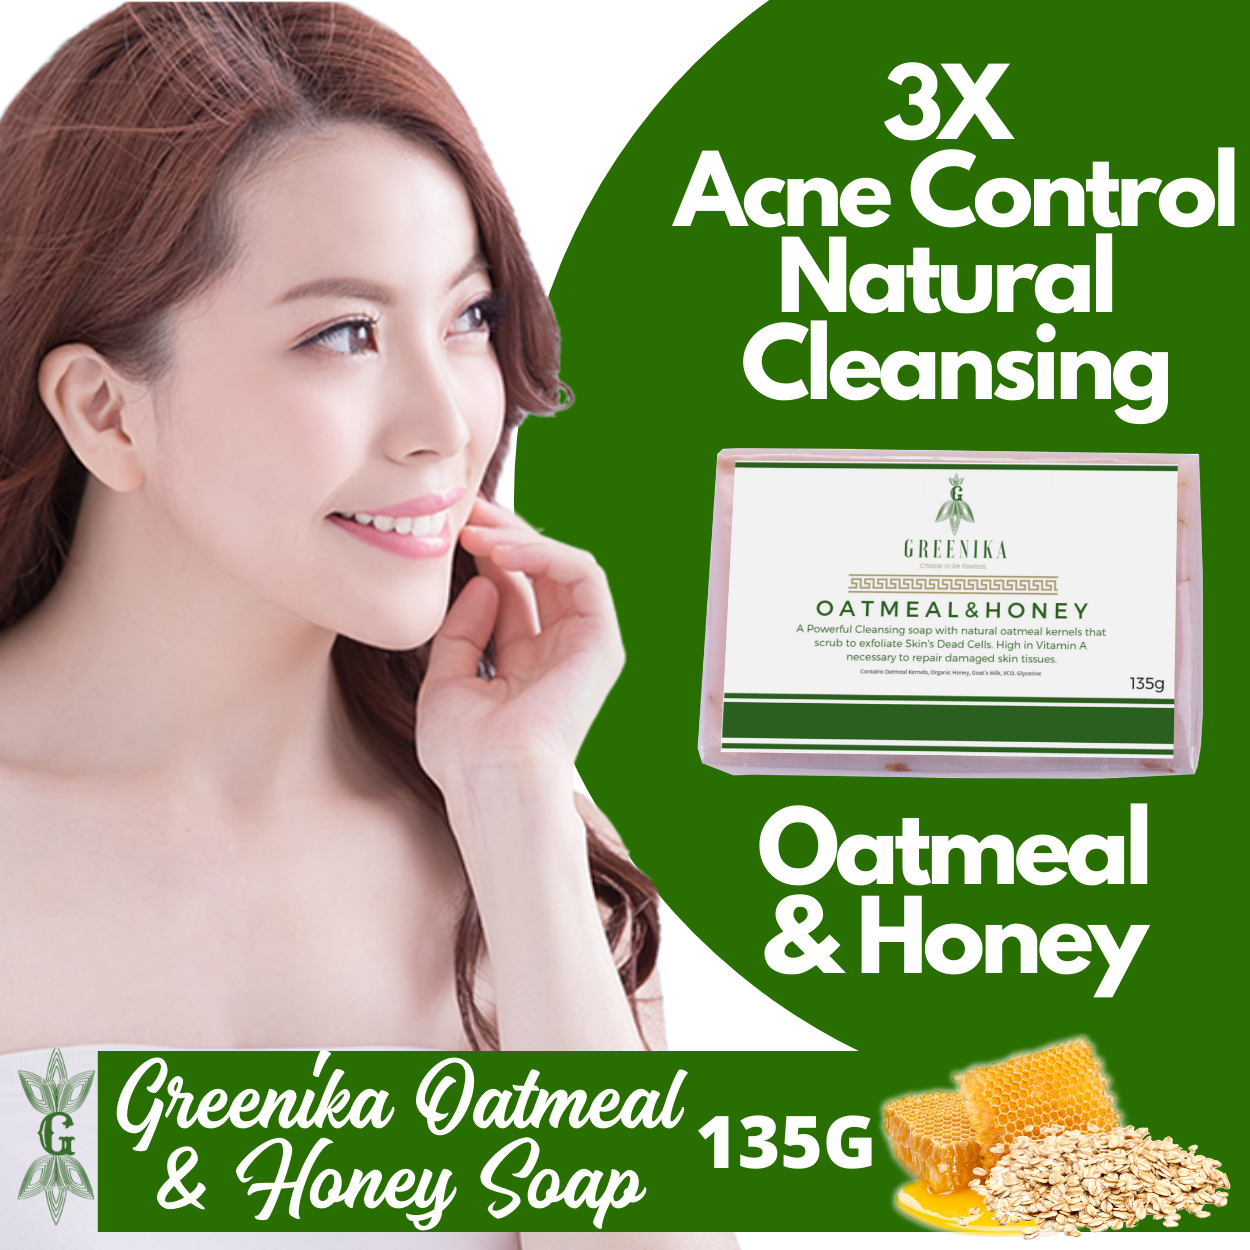 Greenika Premium Oatmeal and Honey Soap